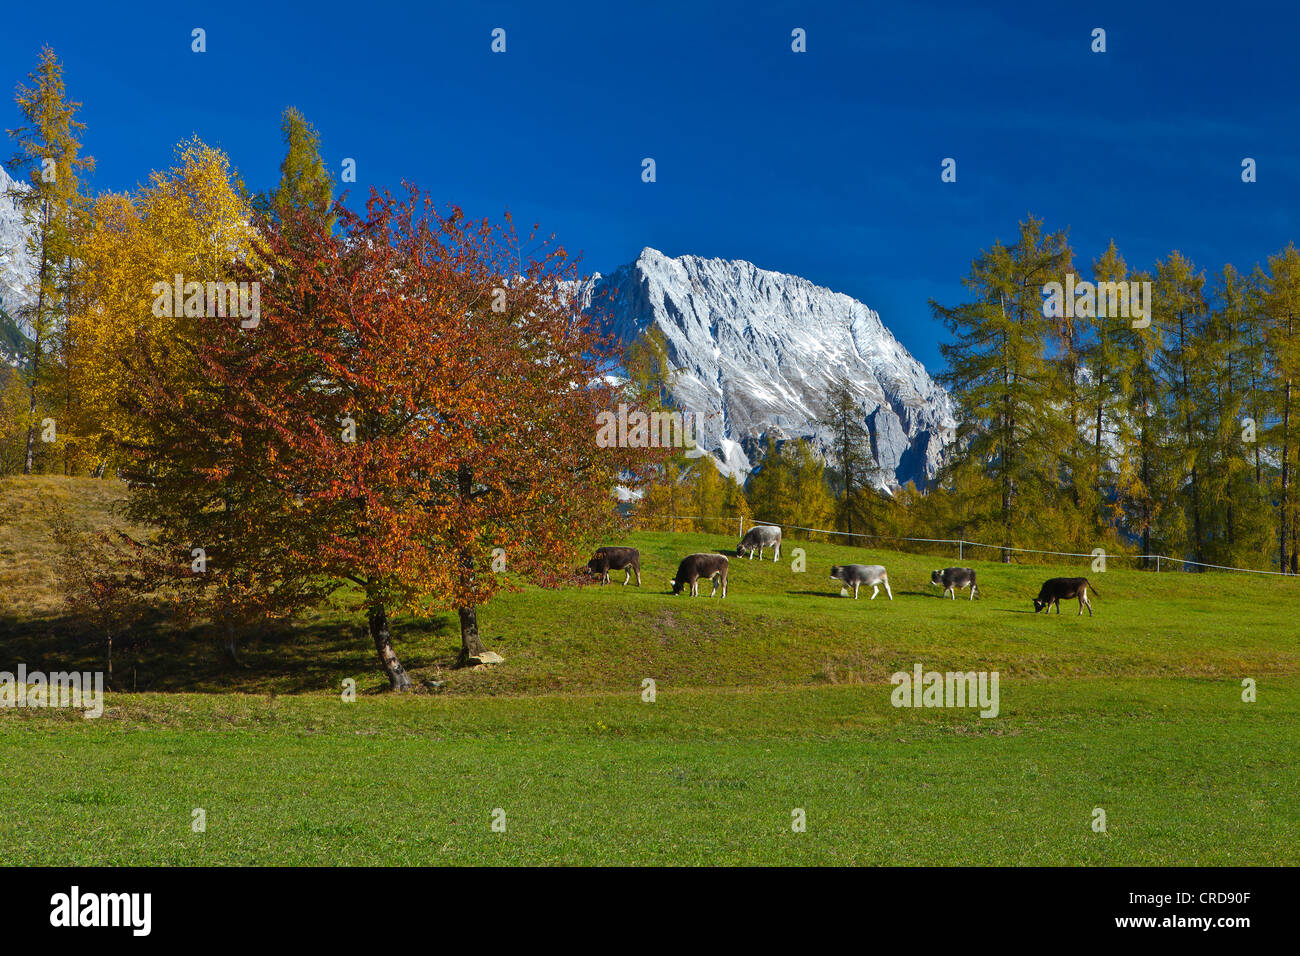 Alps with cattle herd in autumn, Obsteig, Austria Stock Photo